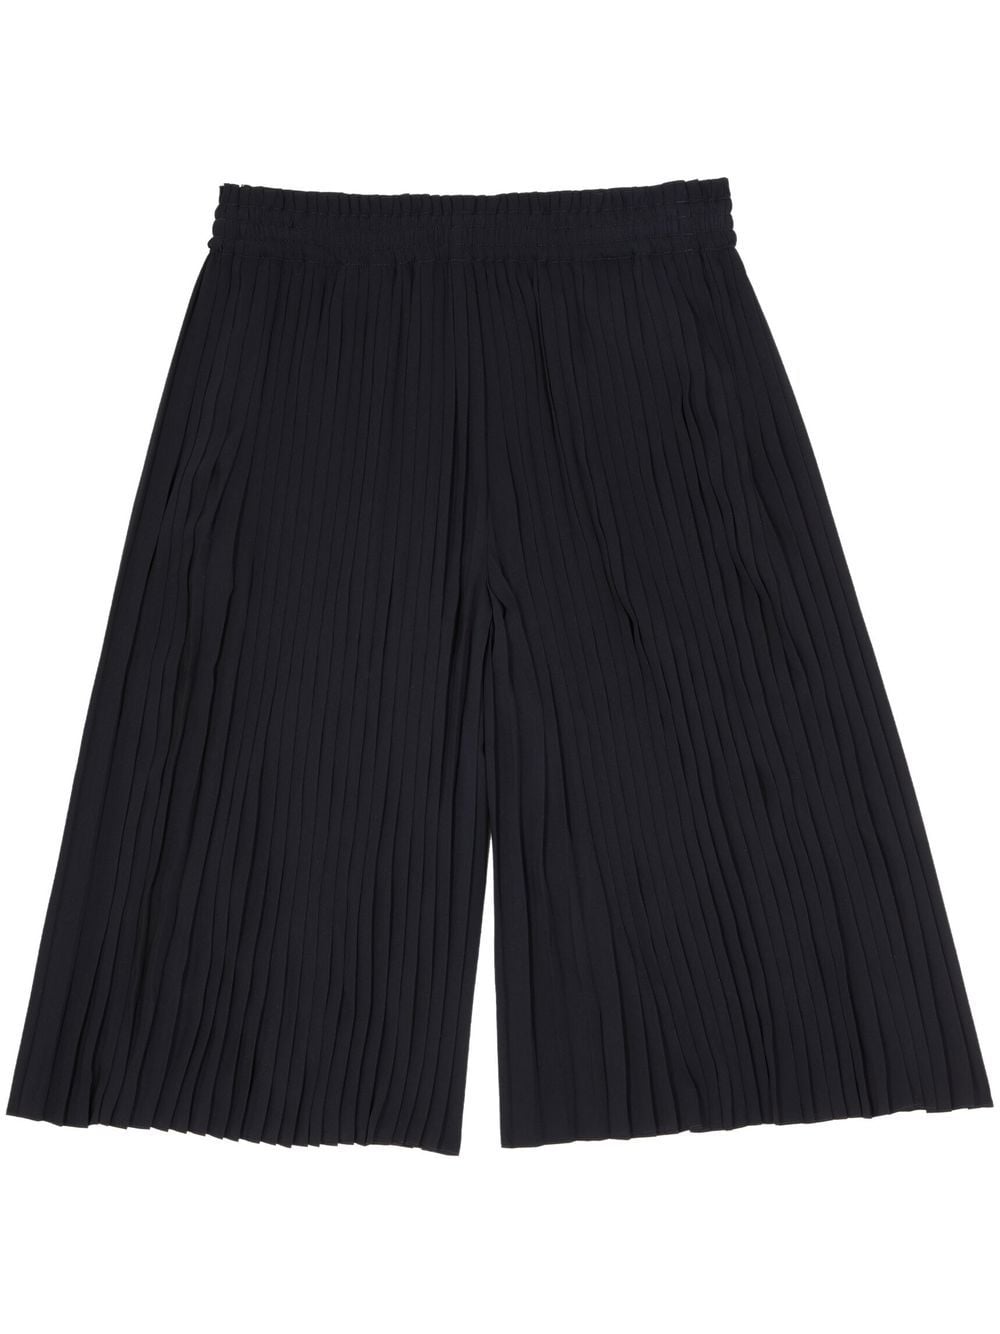 Mm6 Maison Margiela Fully-pleated Knee-length Shorts In Black